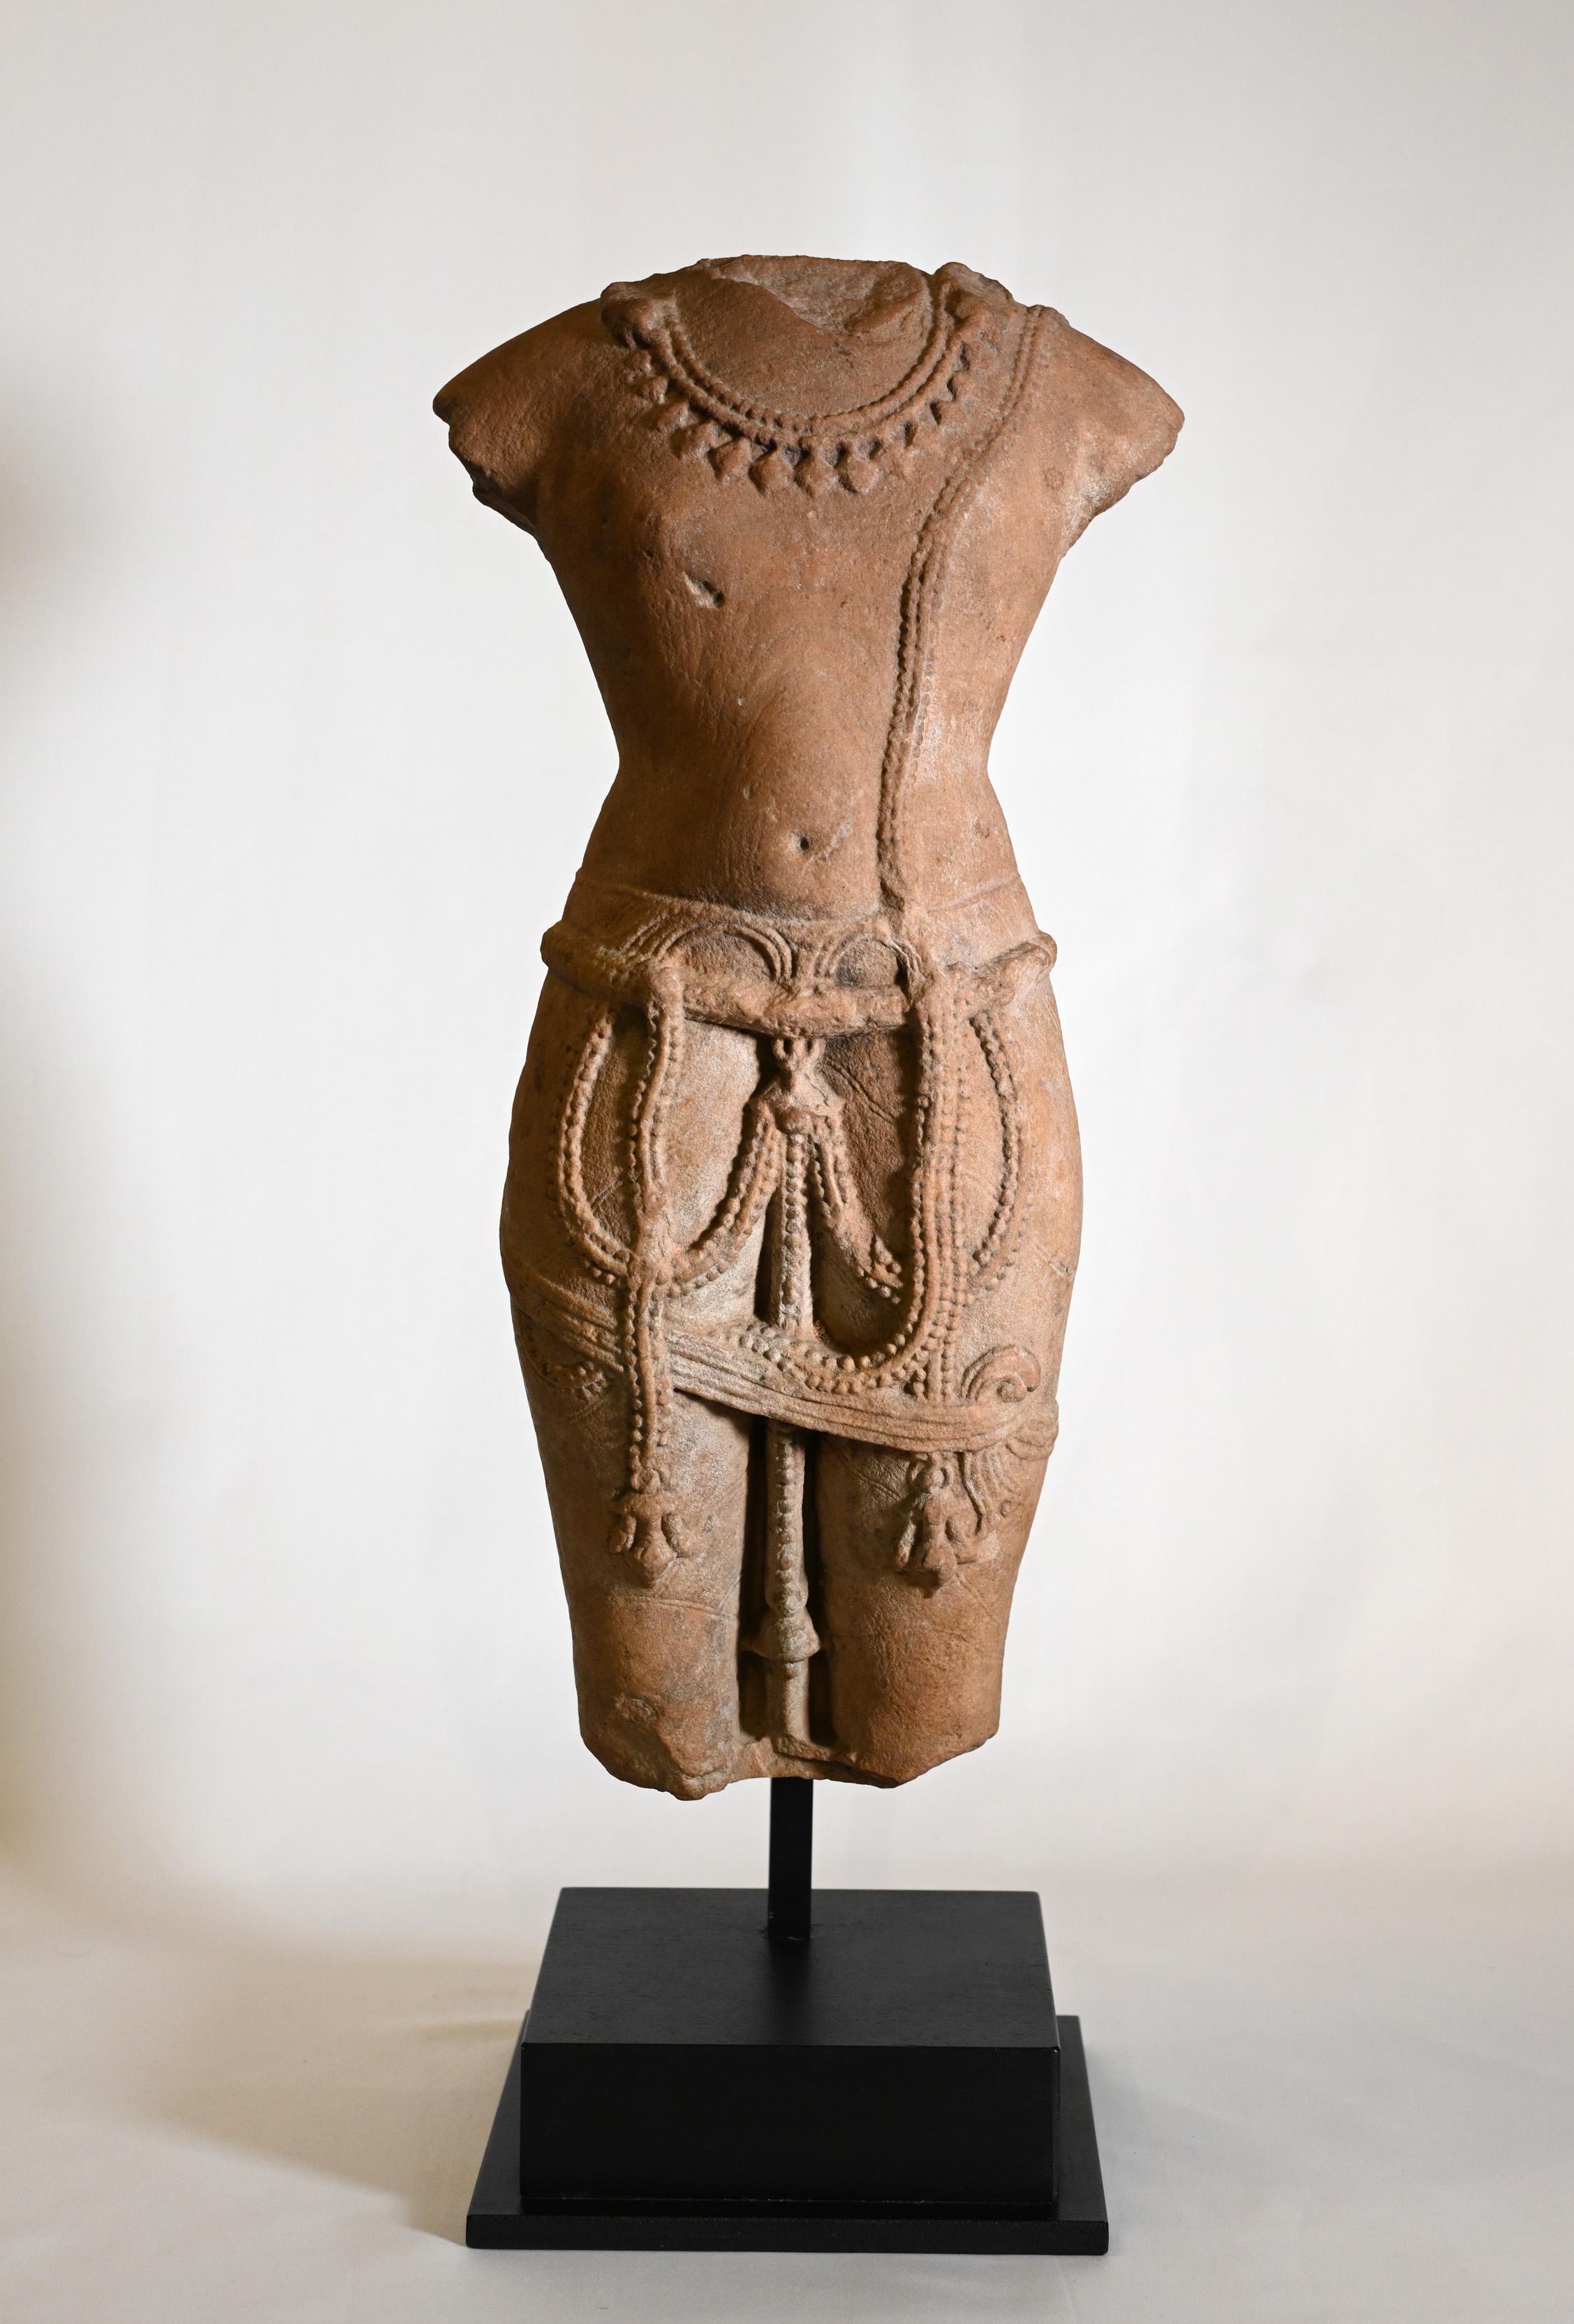 Carved Sandstone Torso of a Male Deity  Possibly Vishnu, Circa 10-11th Century